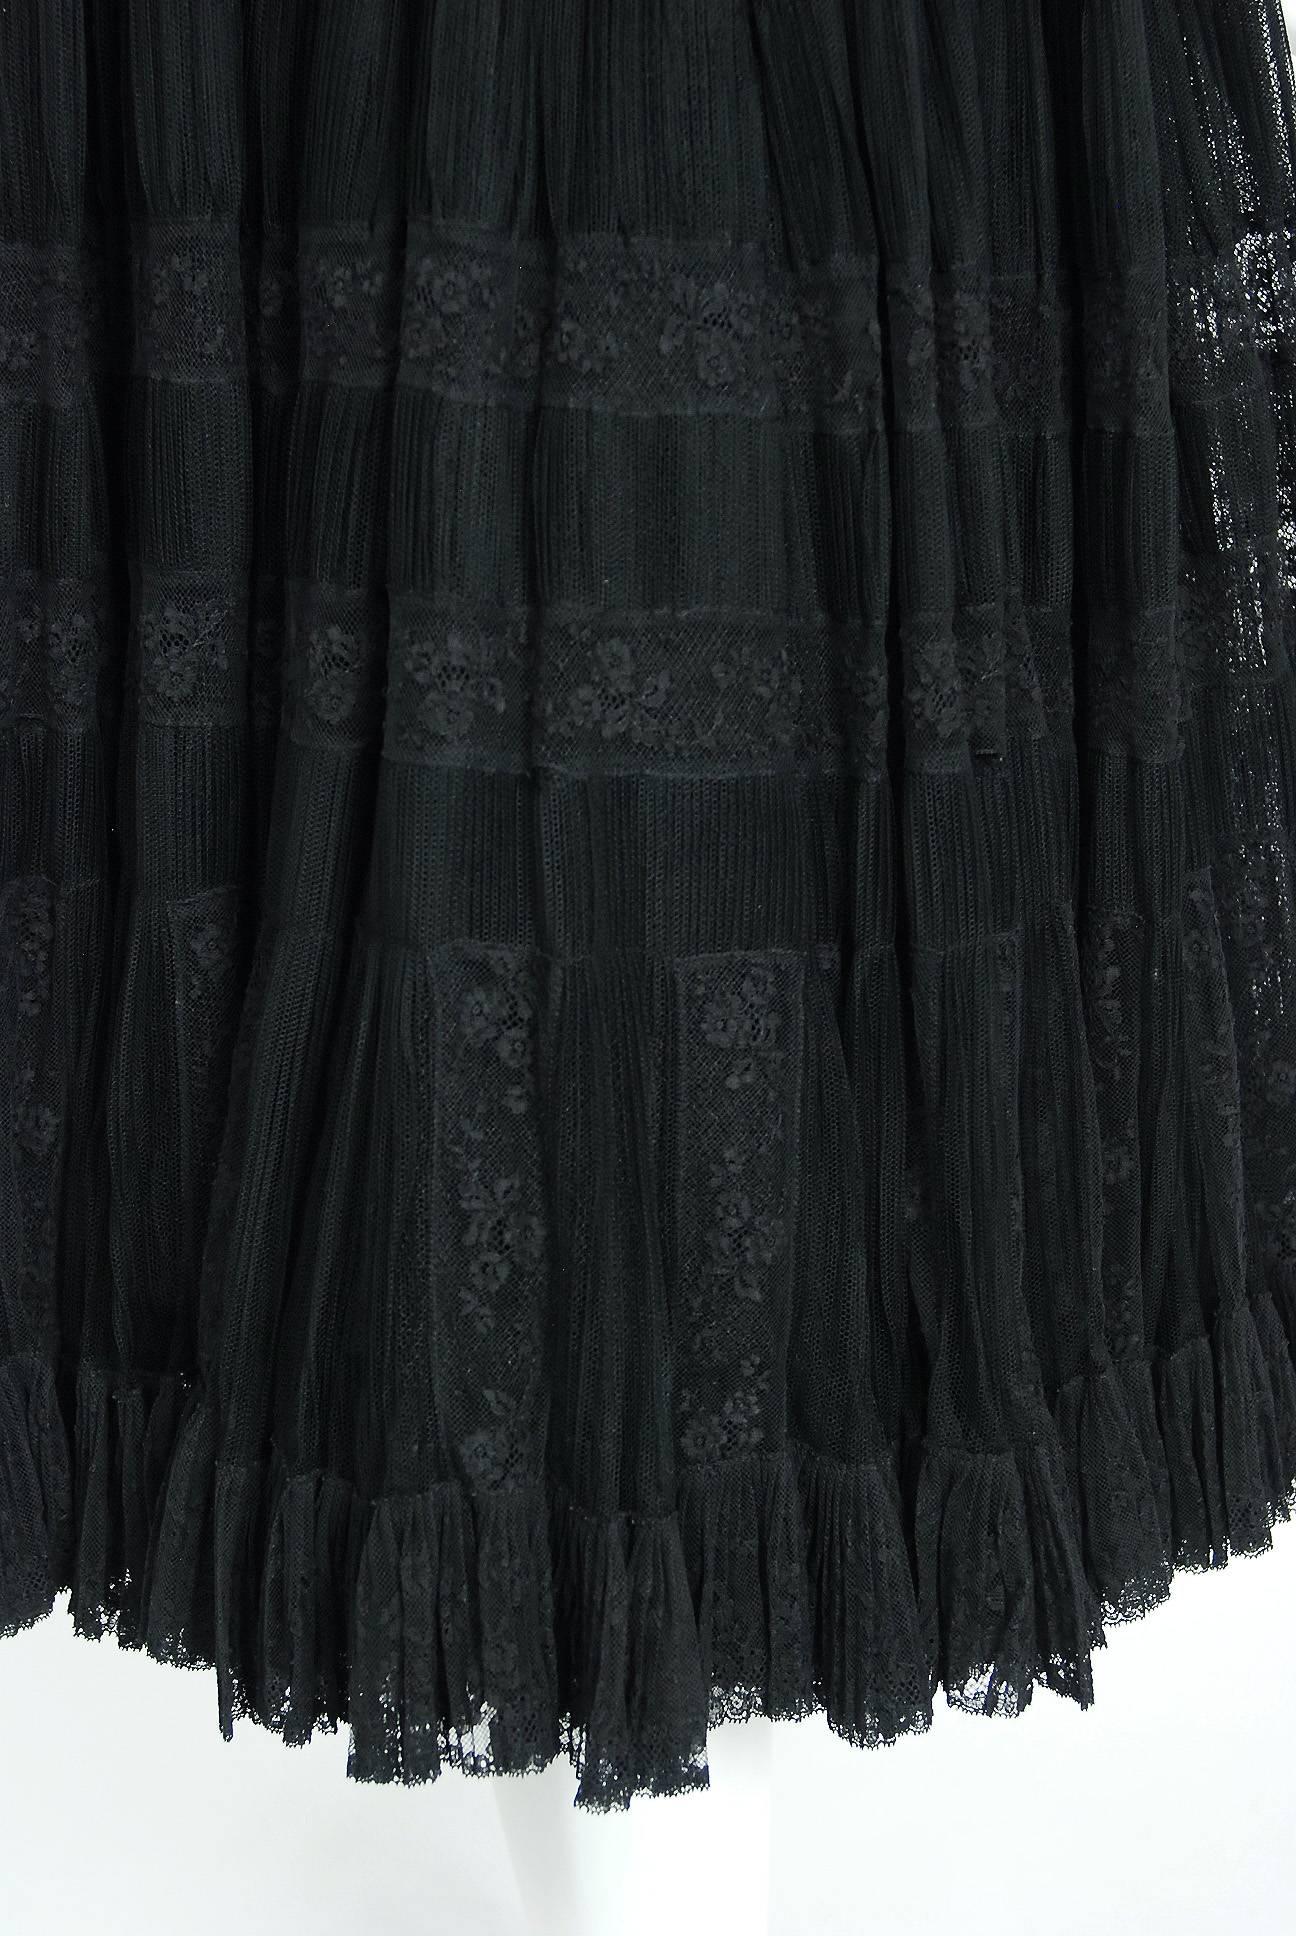 haute couture black dress